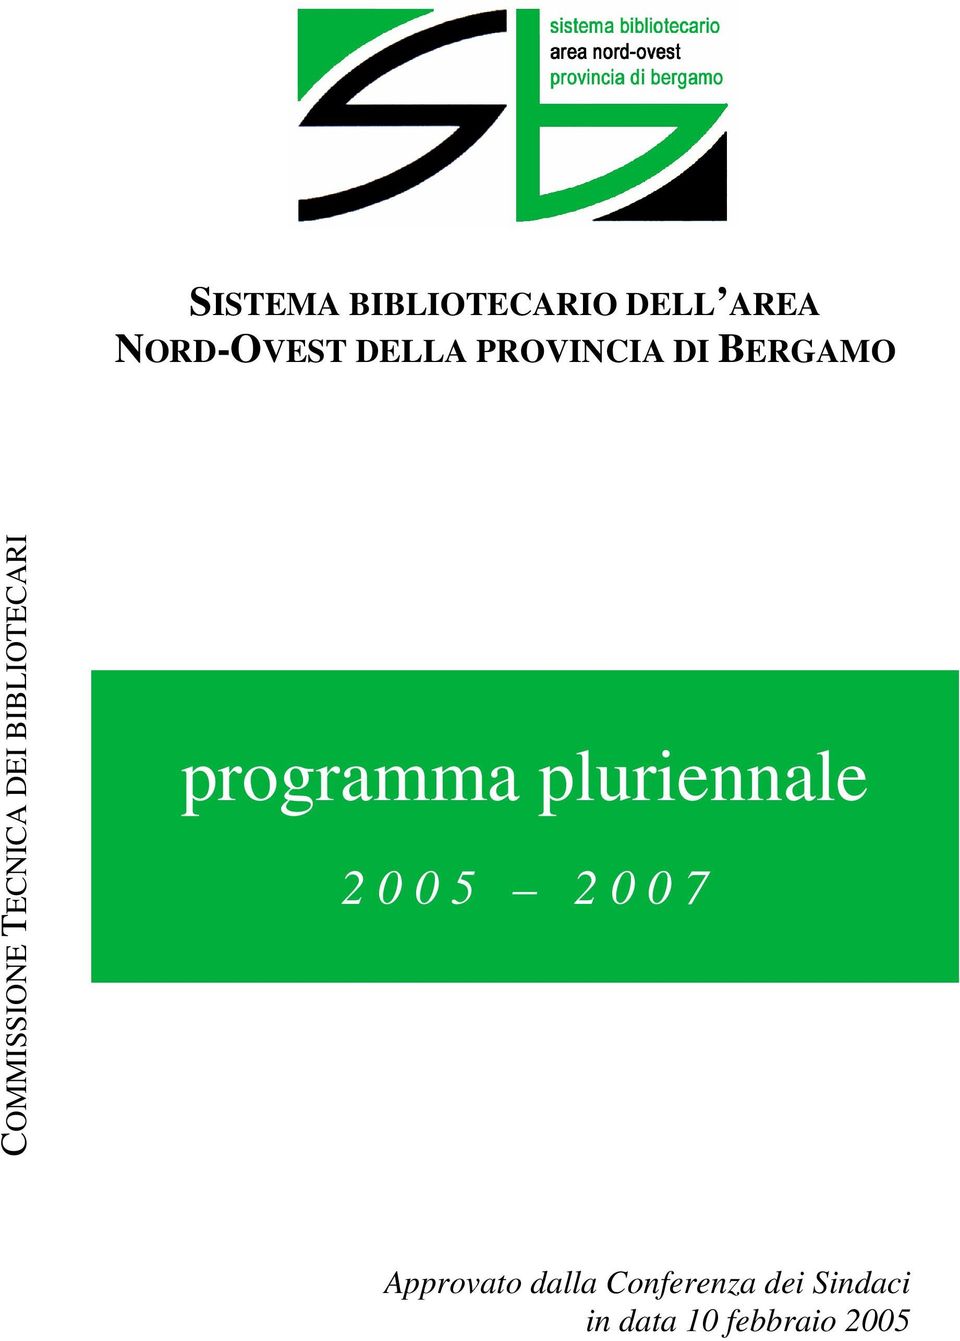 BIBLIOTECARI programma pluriennale 2 0 0 5 2 0 0 7